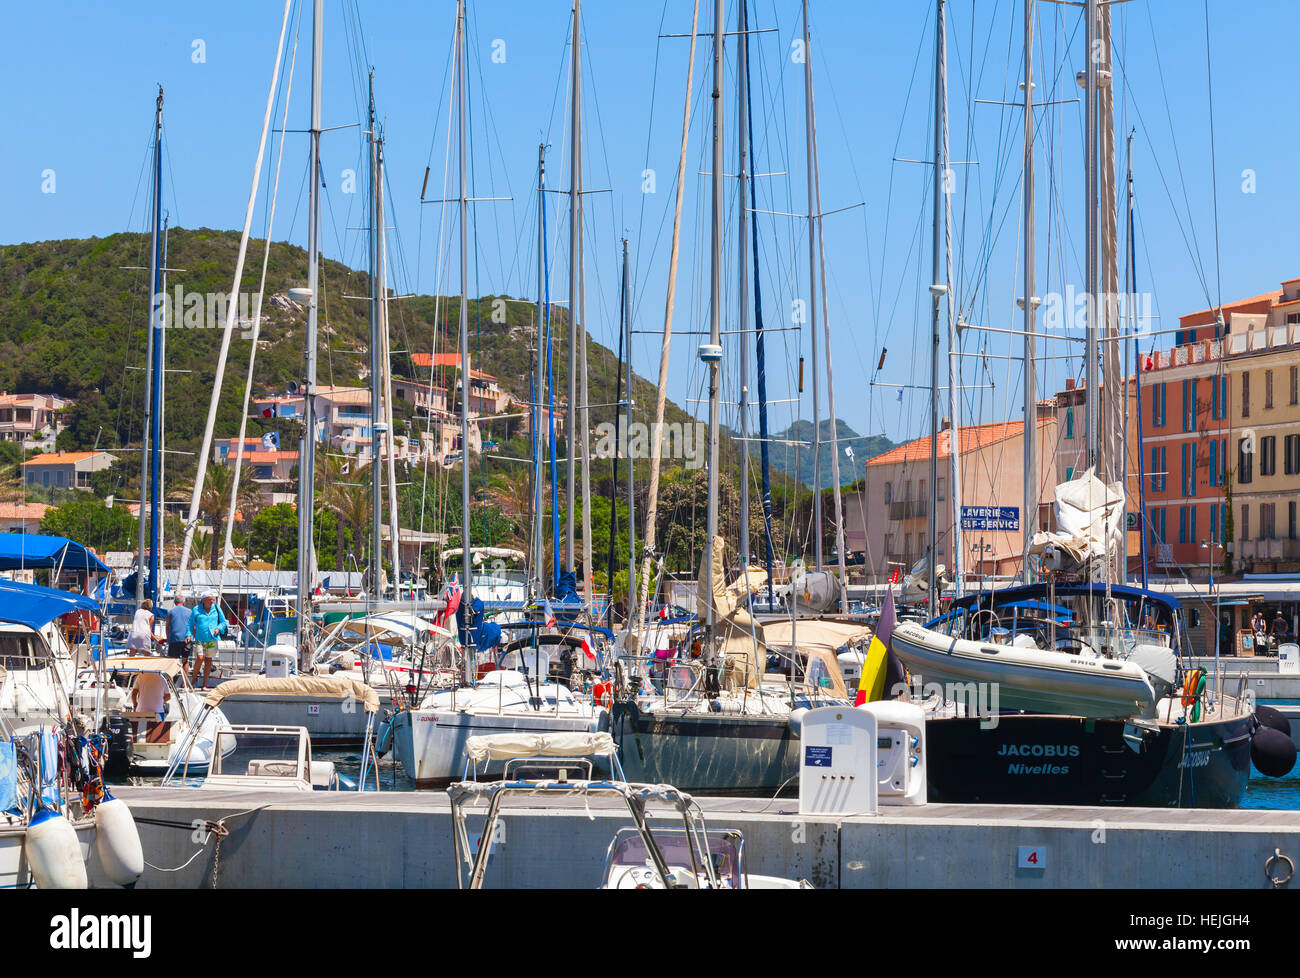 Bonifacio, France - July 2, 2015: Pleasure motorboats and sailing yachts are moored in marina of Bonifacio, small resort port city of Corsica island Stock Photo